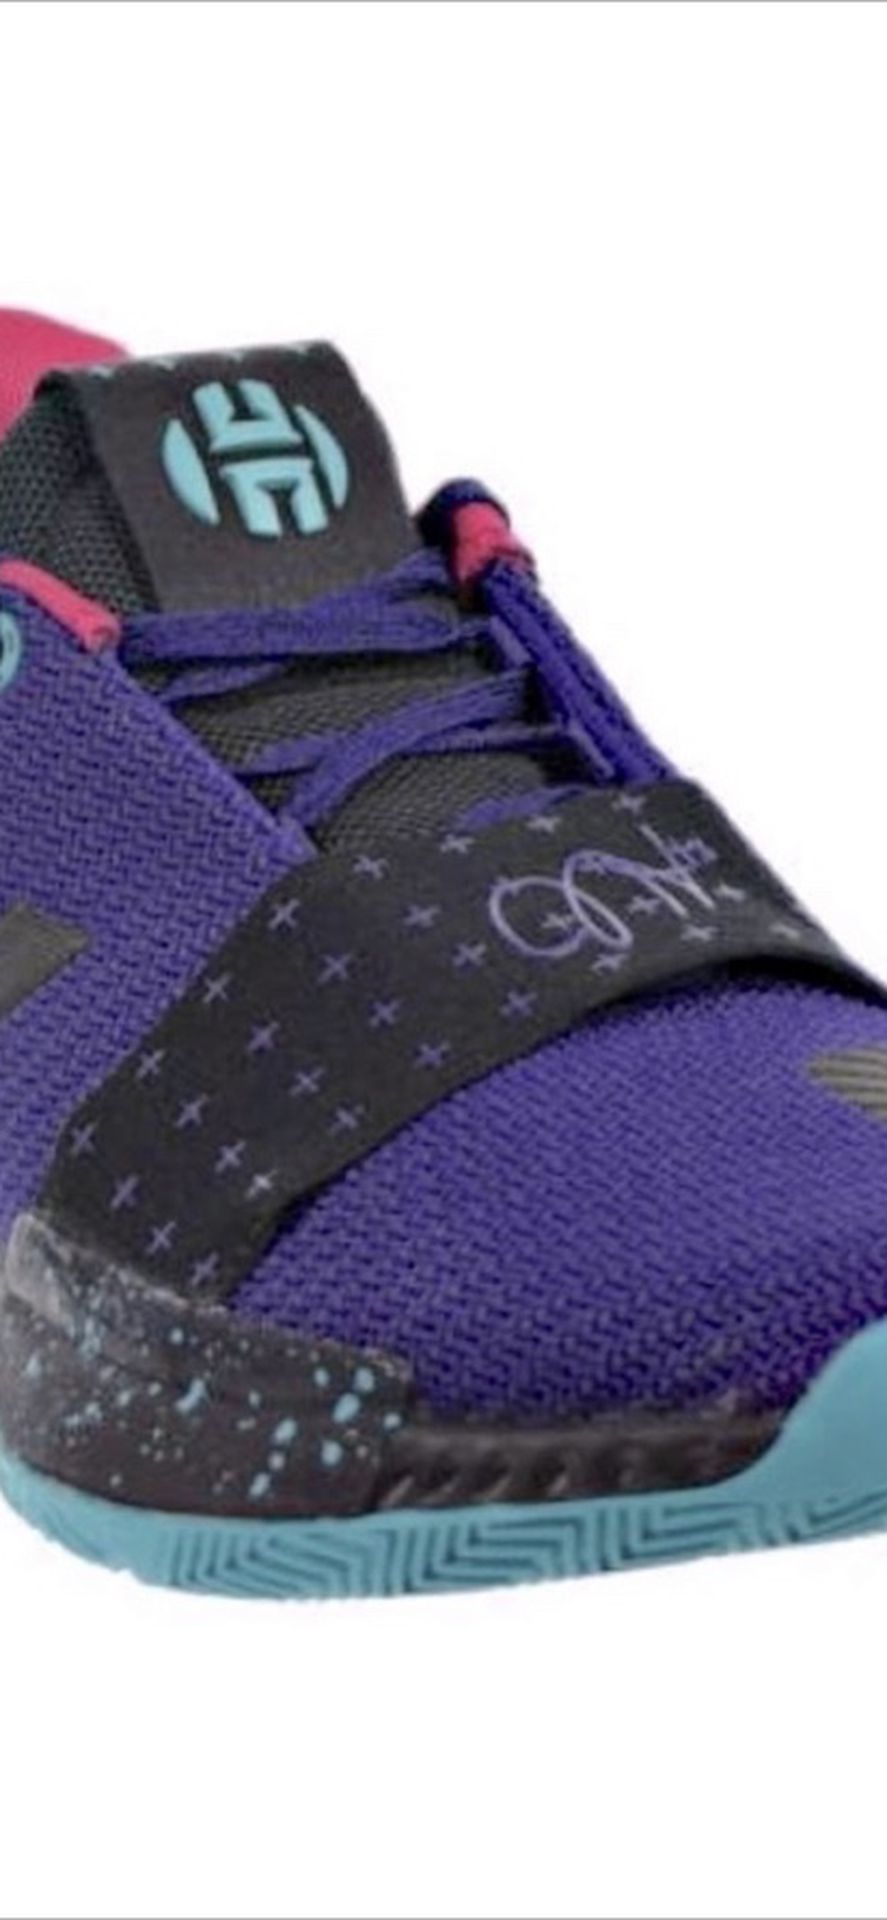 Adidas Harden Vol. 3 J "Glow" Basketball Sneakers Shoes Size 5.5 Purple